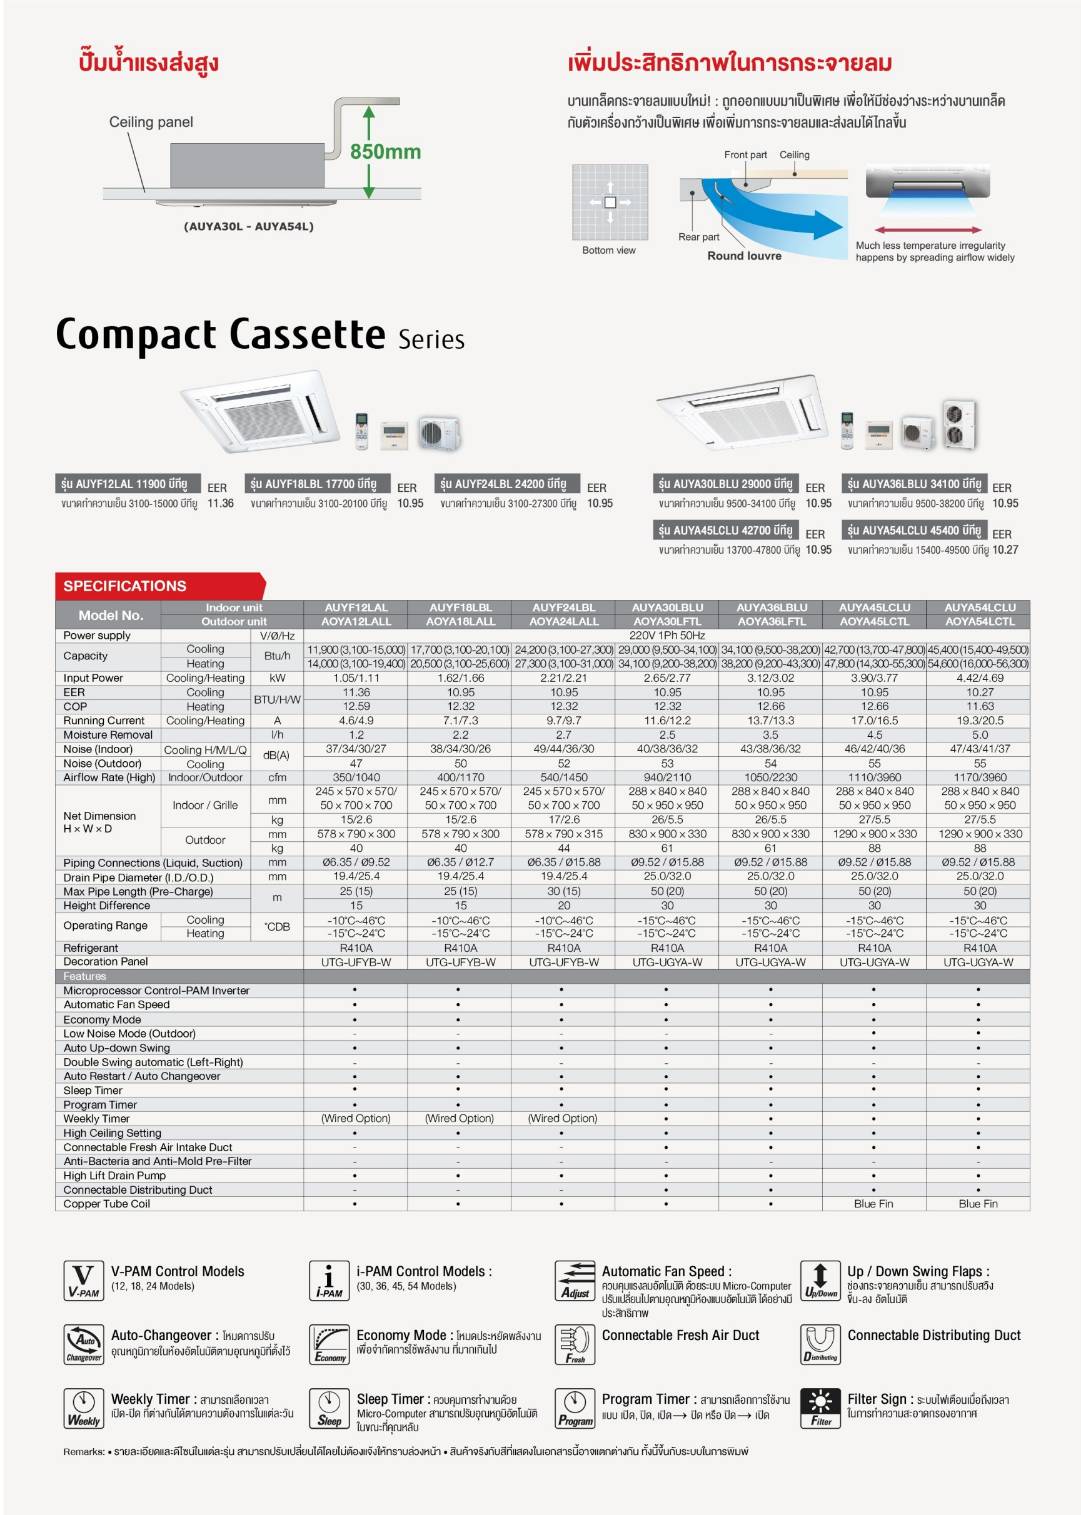 Fujitsu Compact Cassette Series Spec